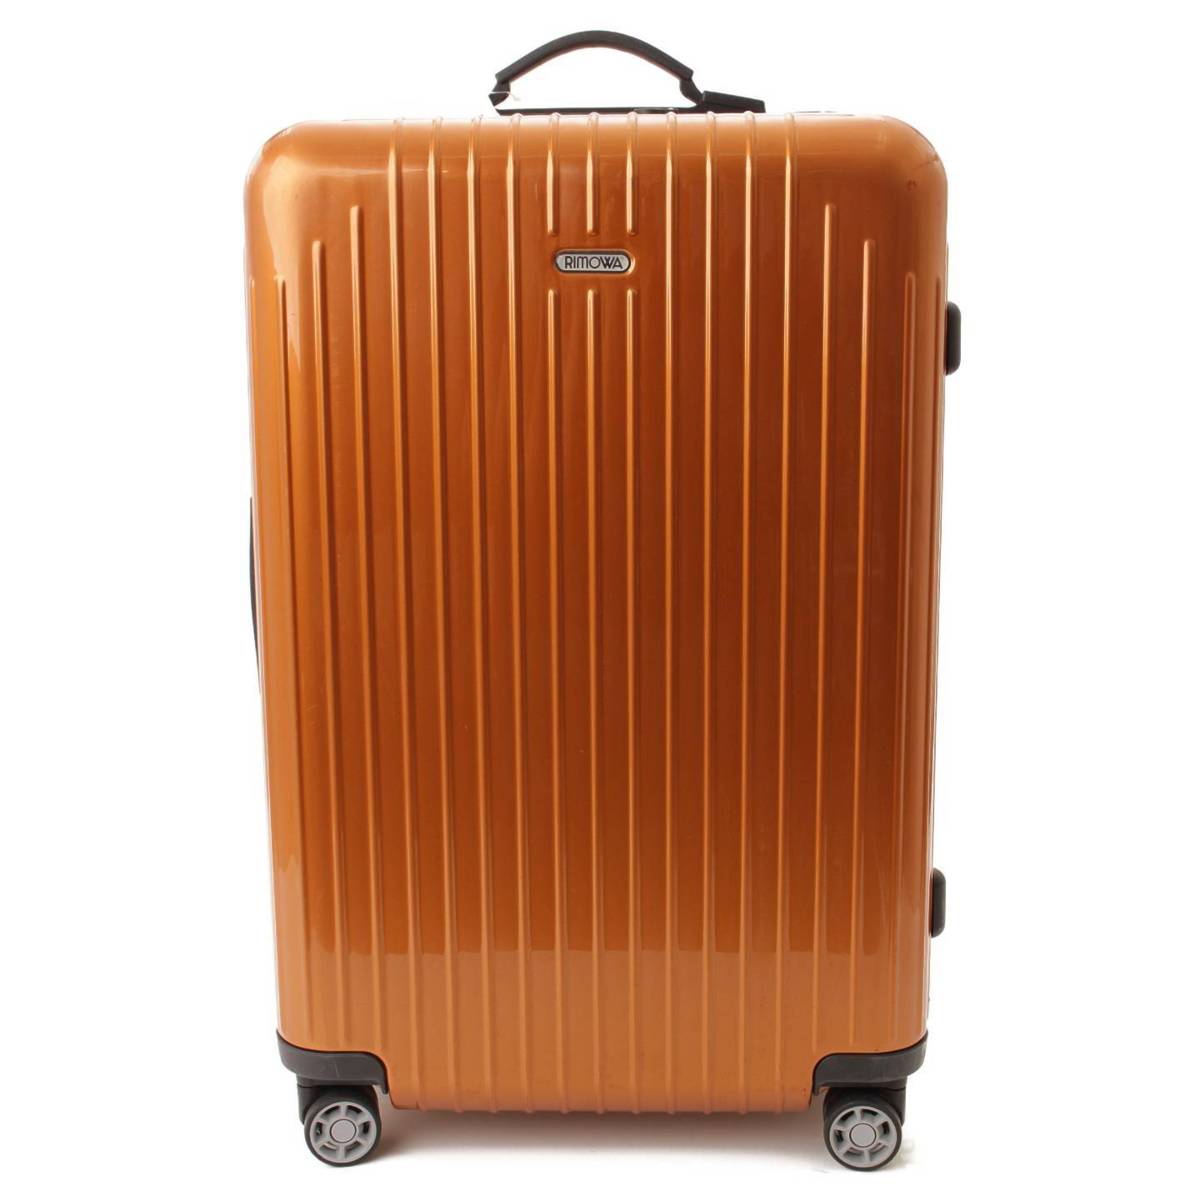 rimowa スーツケース サルサエアー 820.73.46.4